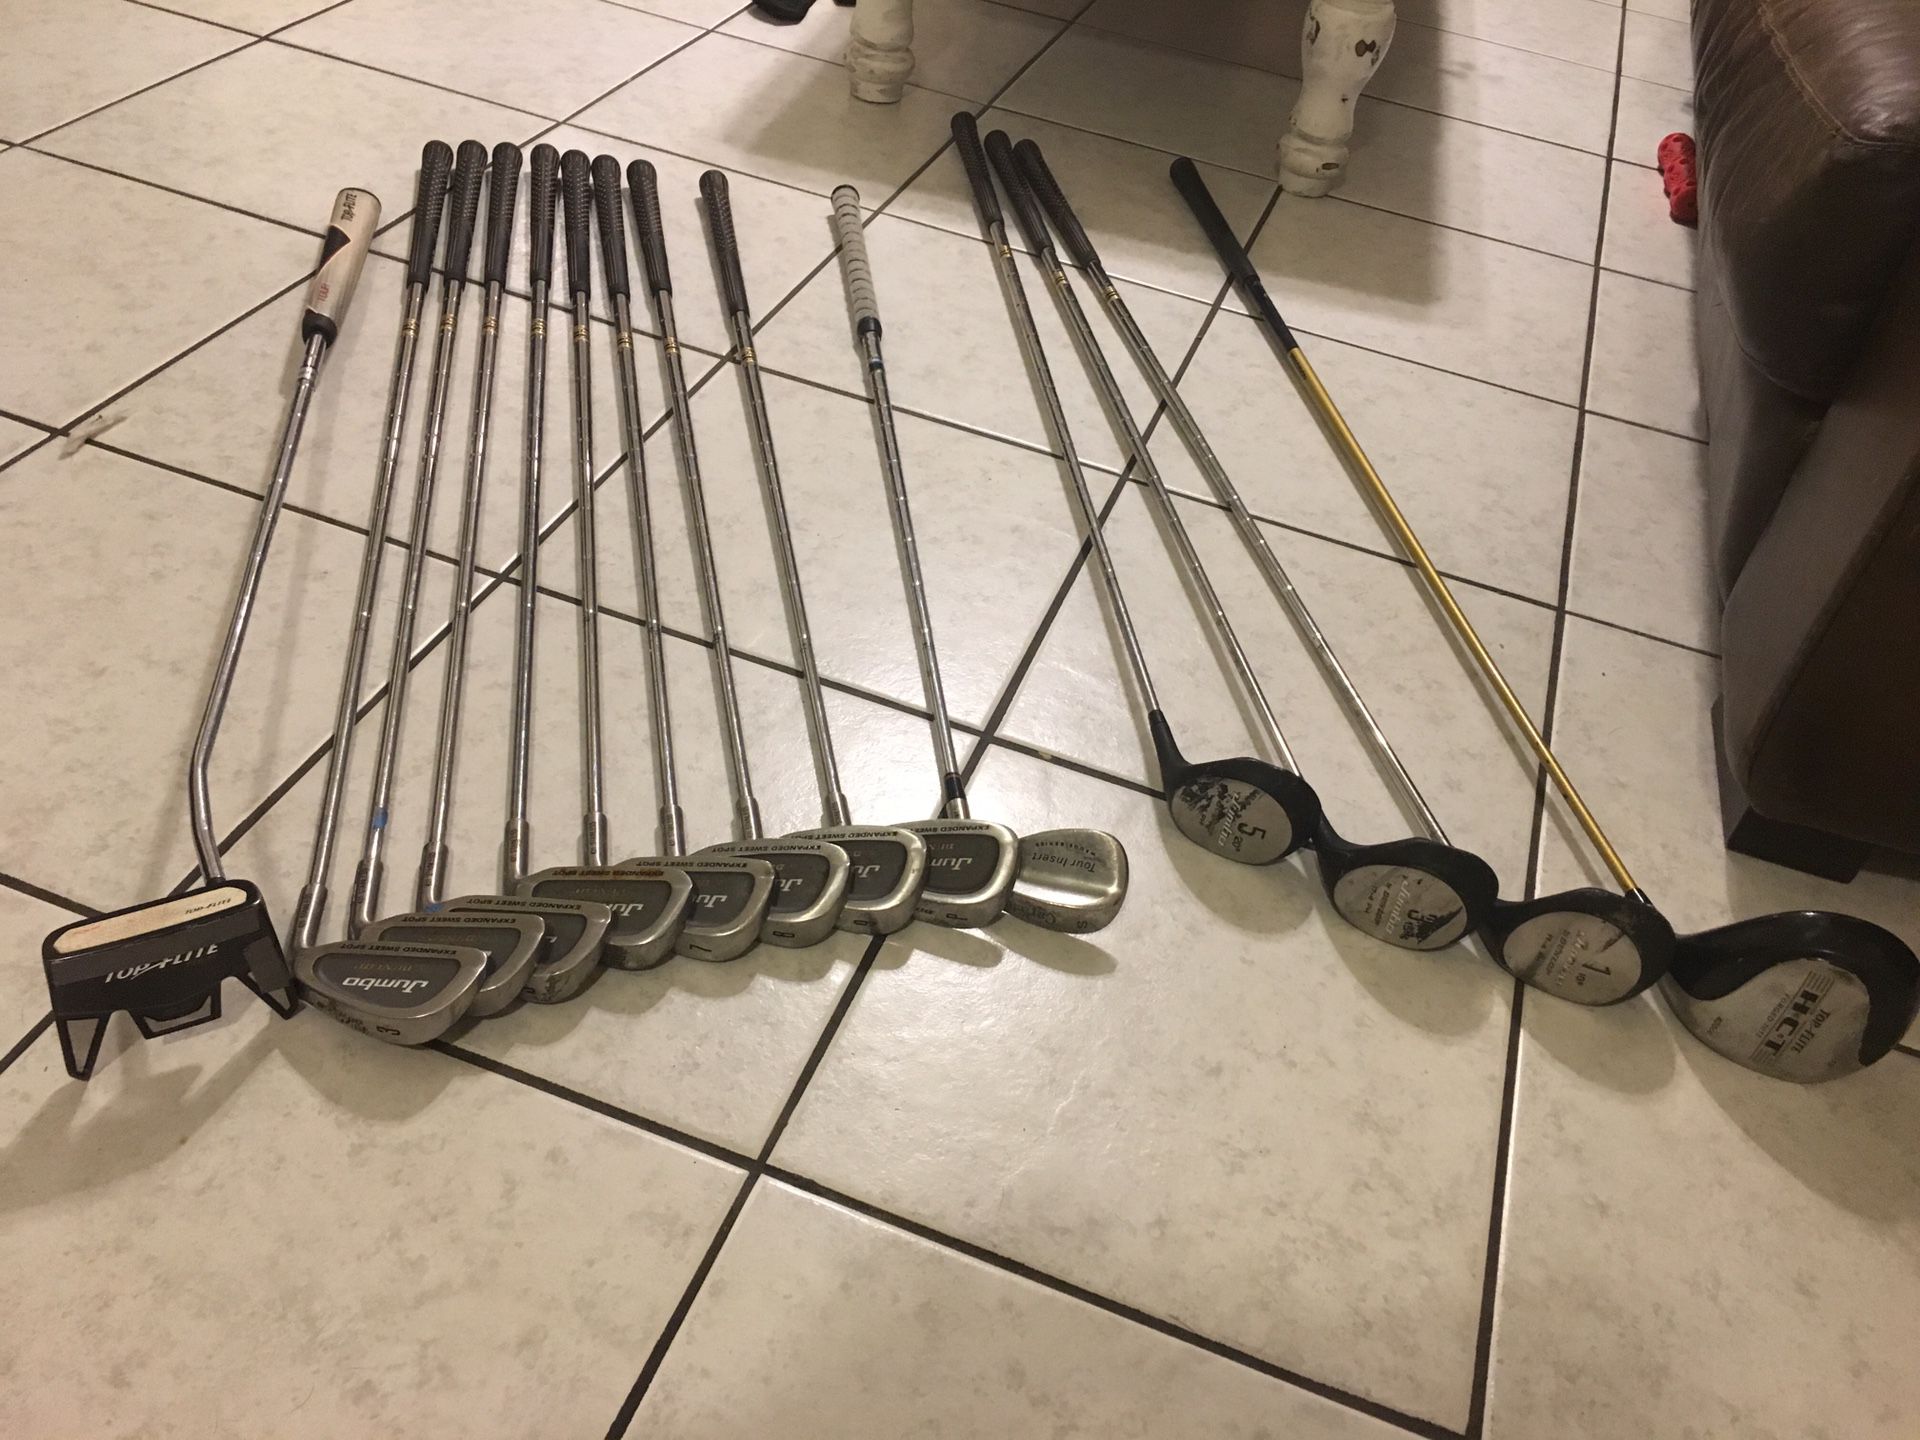 Full set of golf clubs!